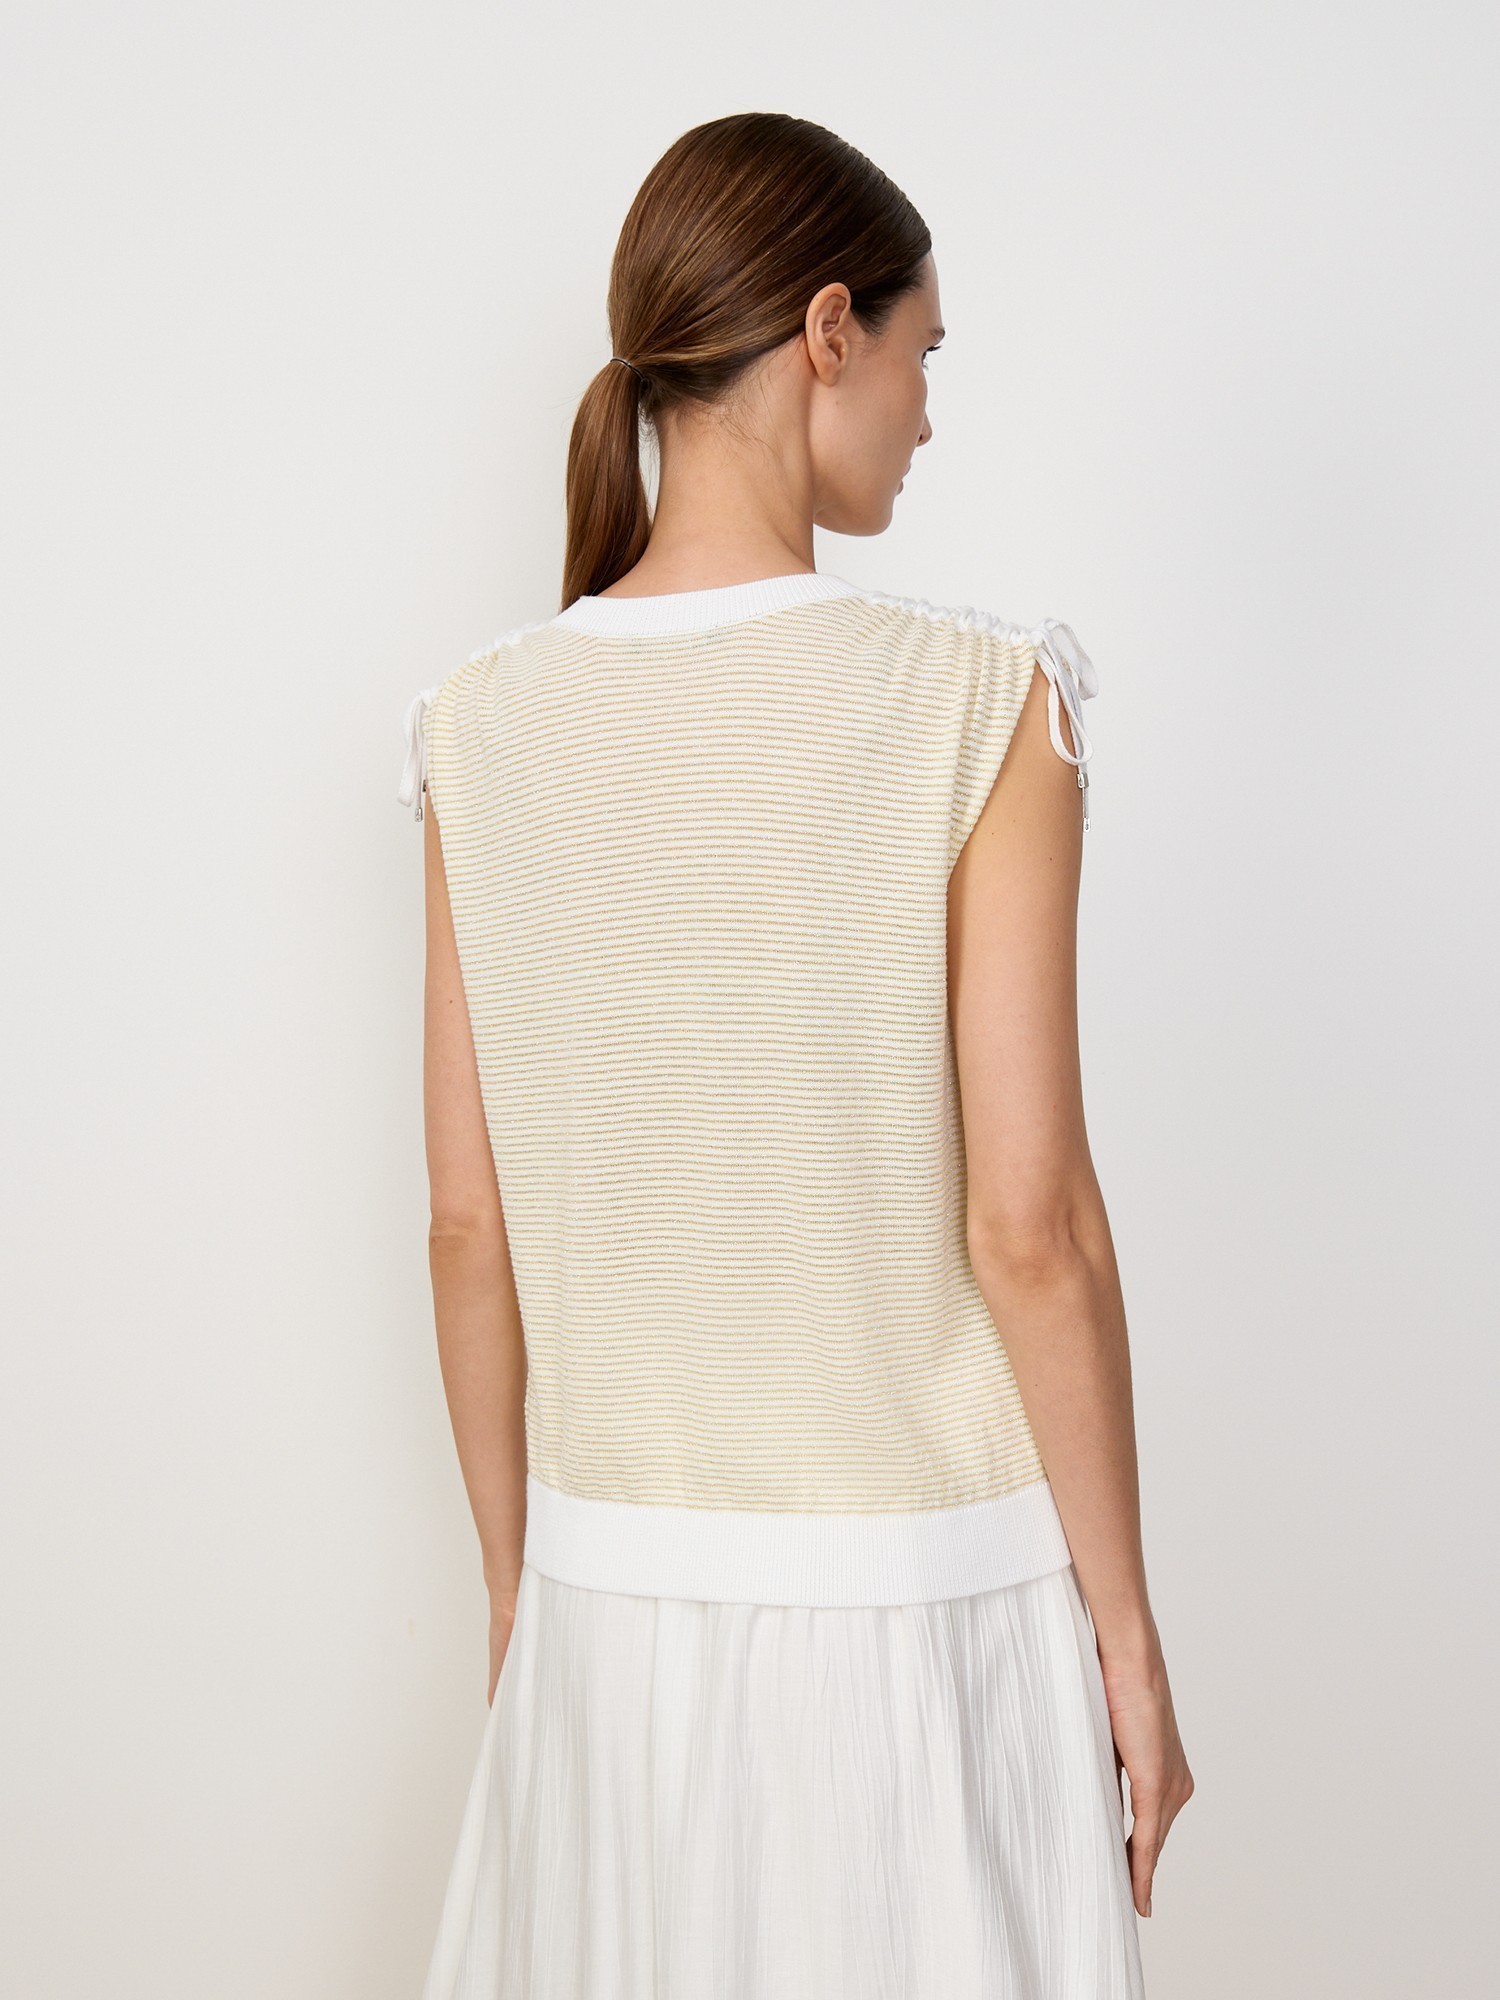 Вязаная блуза с люрексом Elis BL1054V, цвет жёлто-белый, размер 48 - фото 4